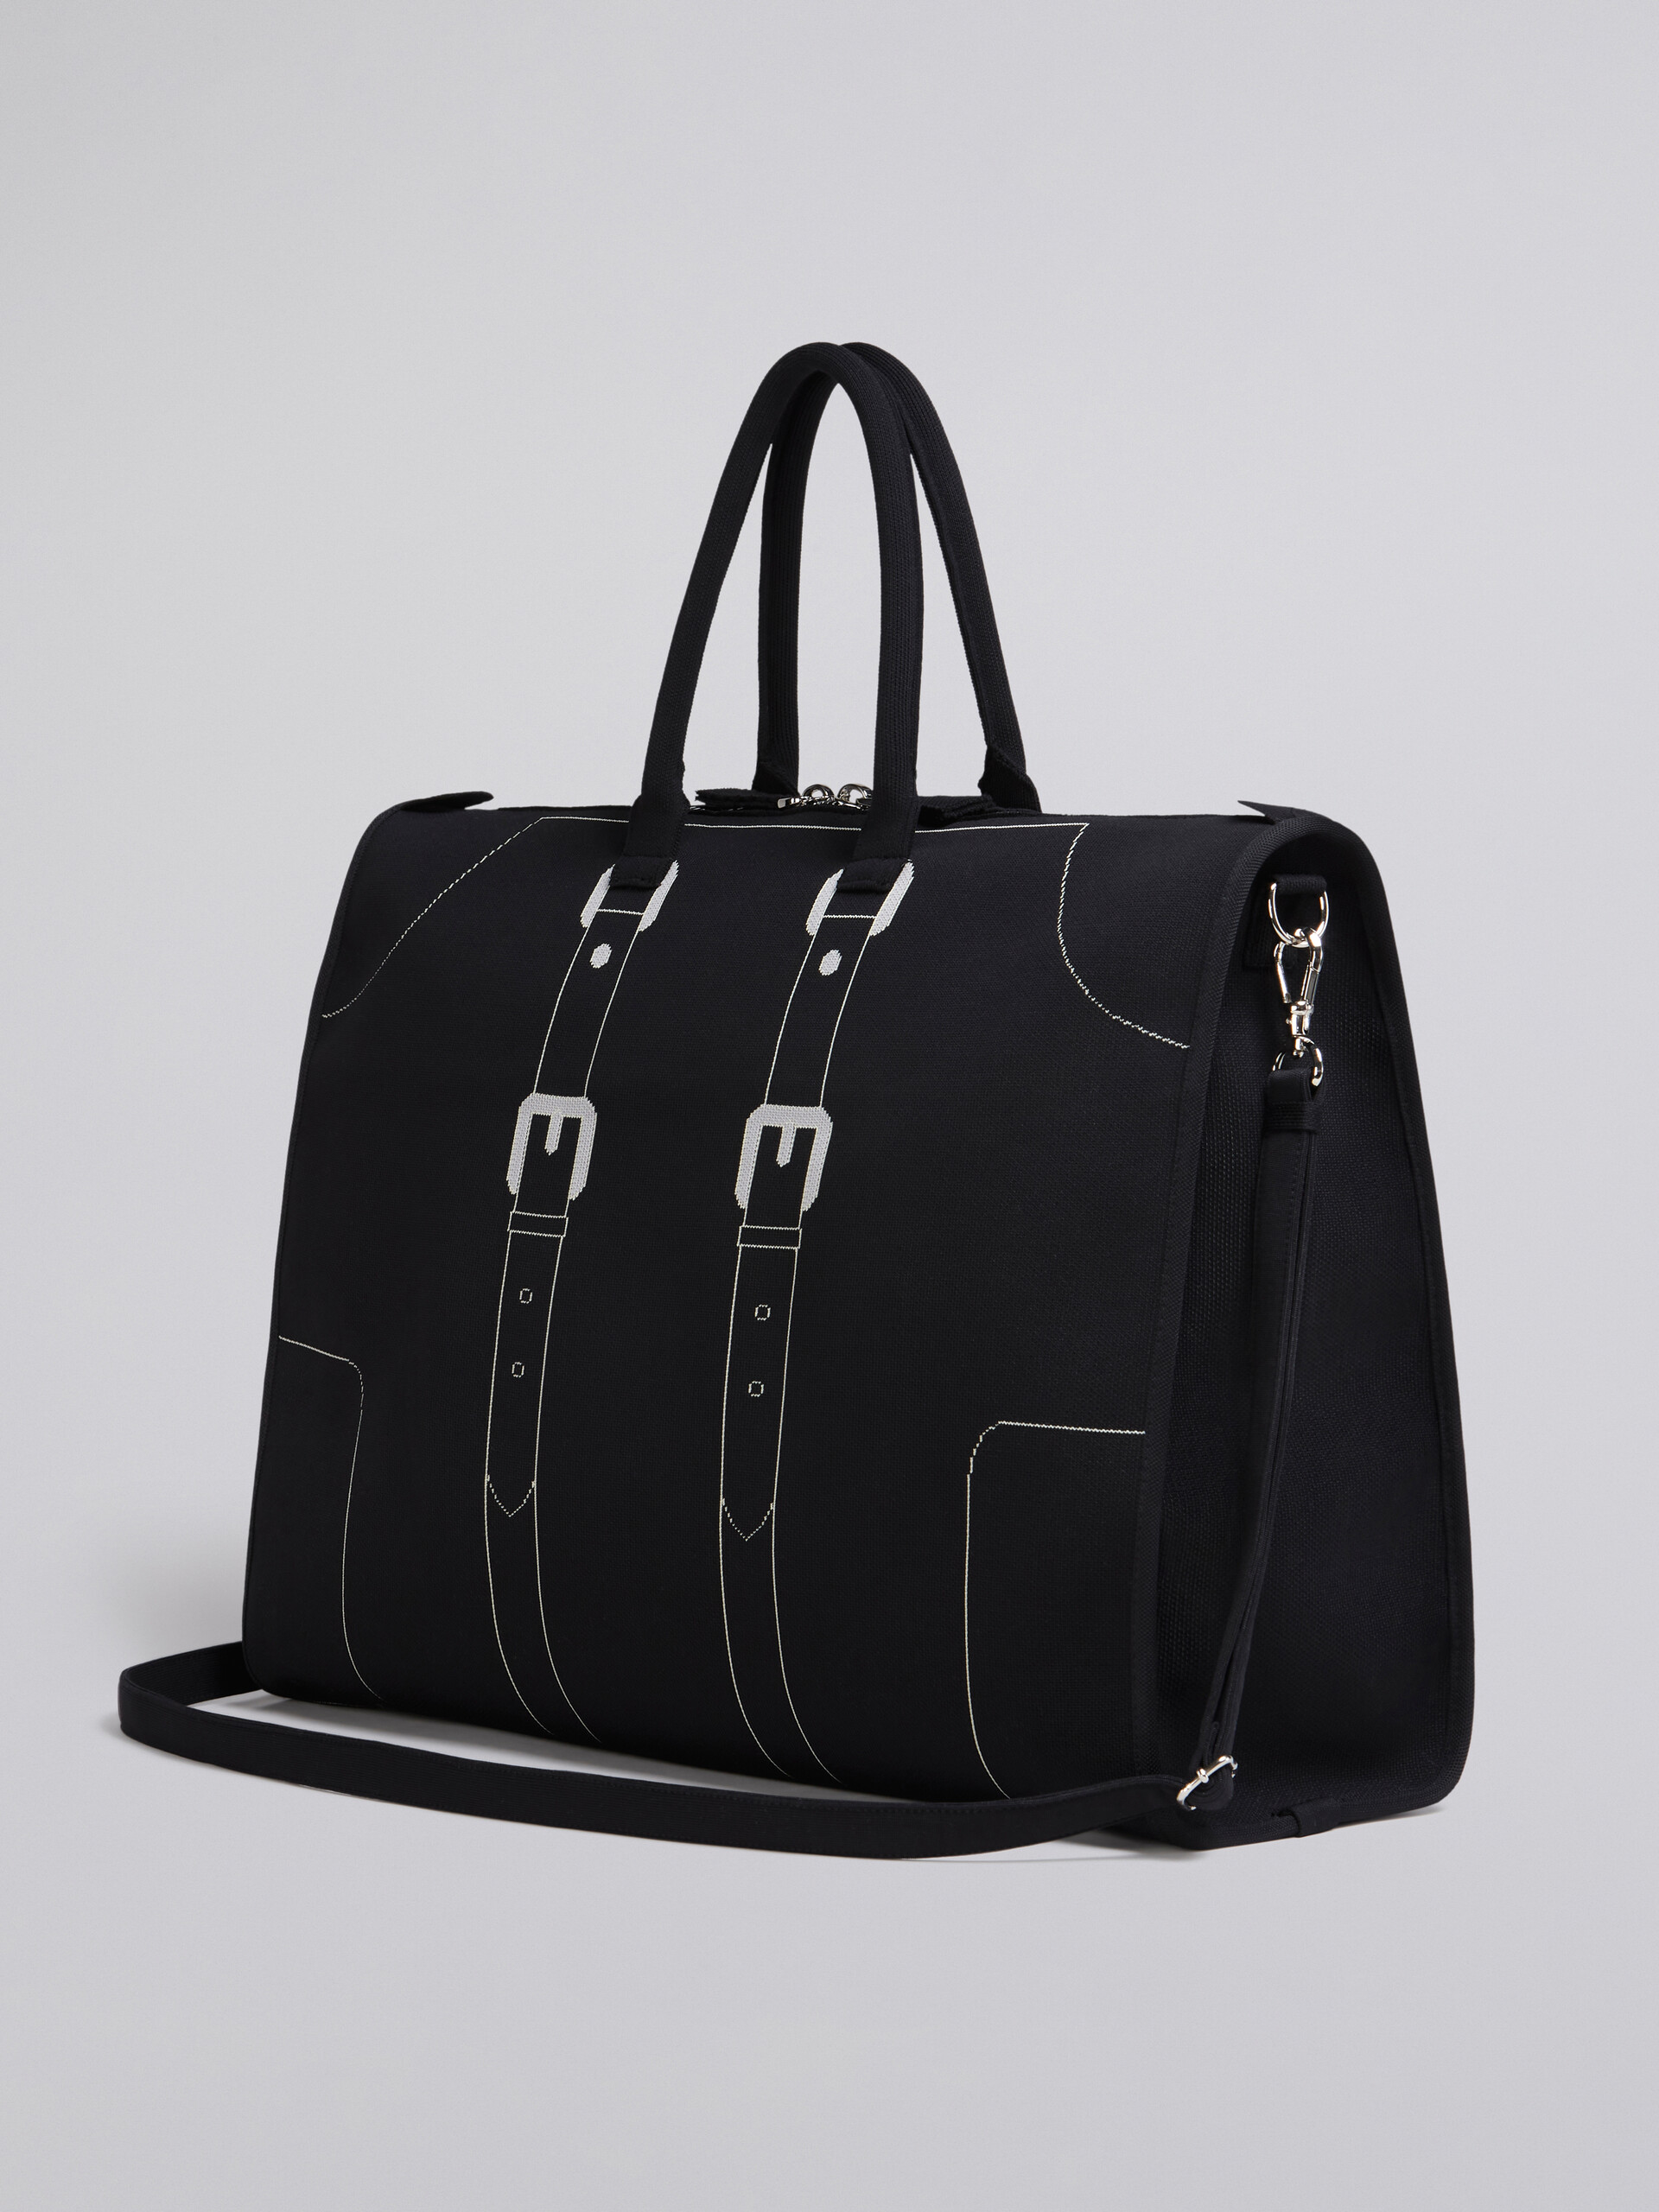 Black trompe-l'œil jacquard travel bag - Travelling Bag - Image 3